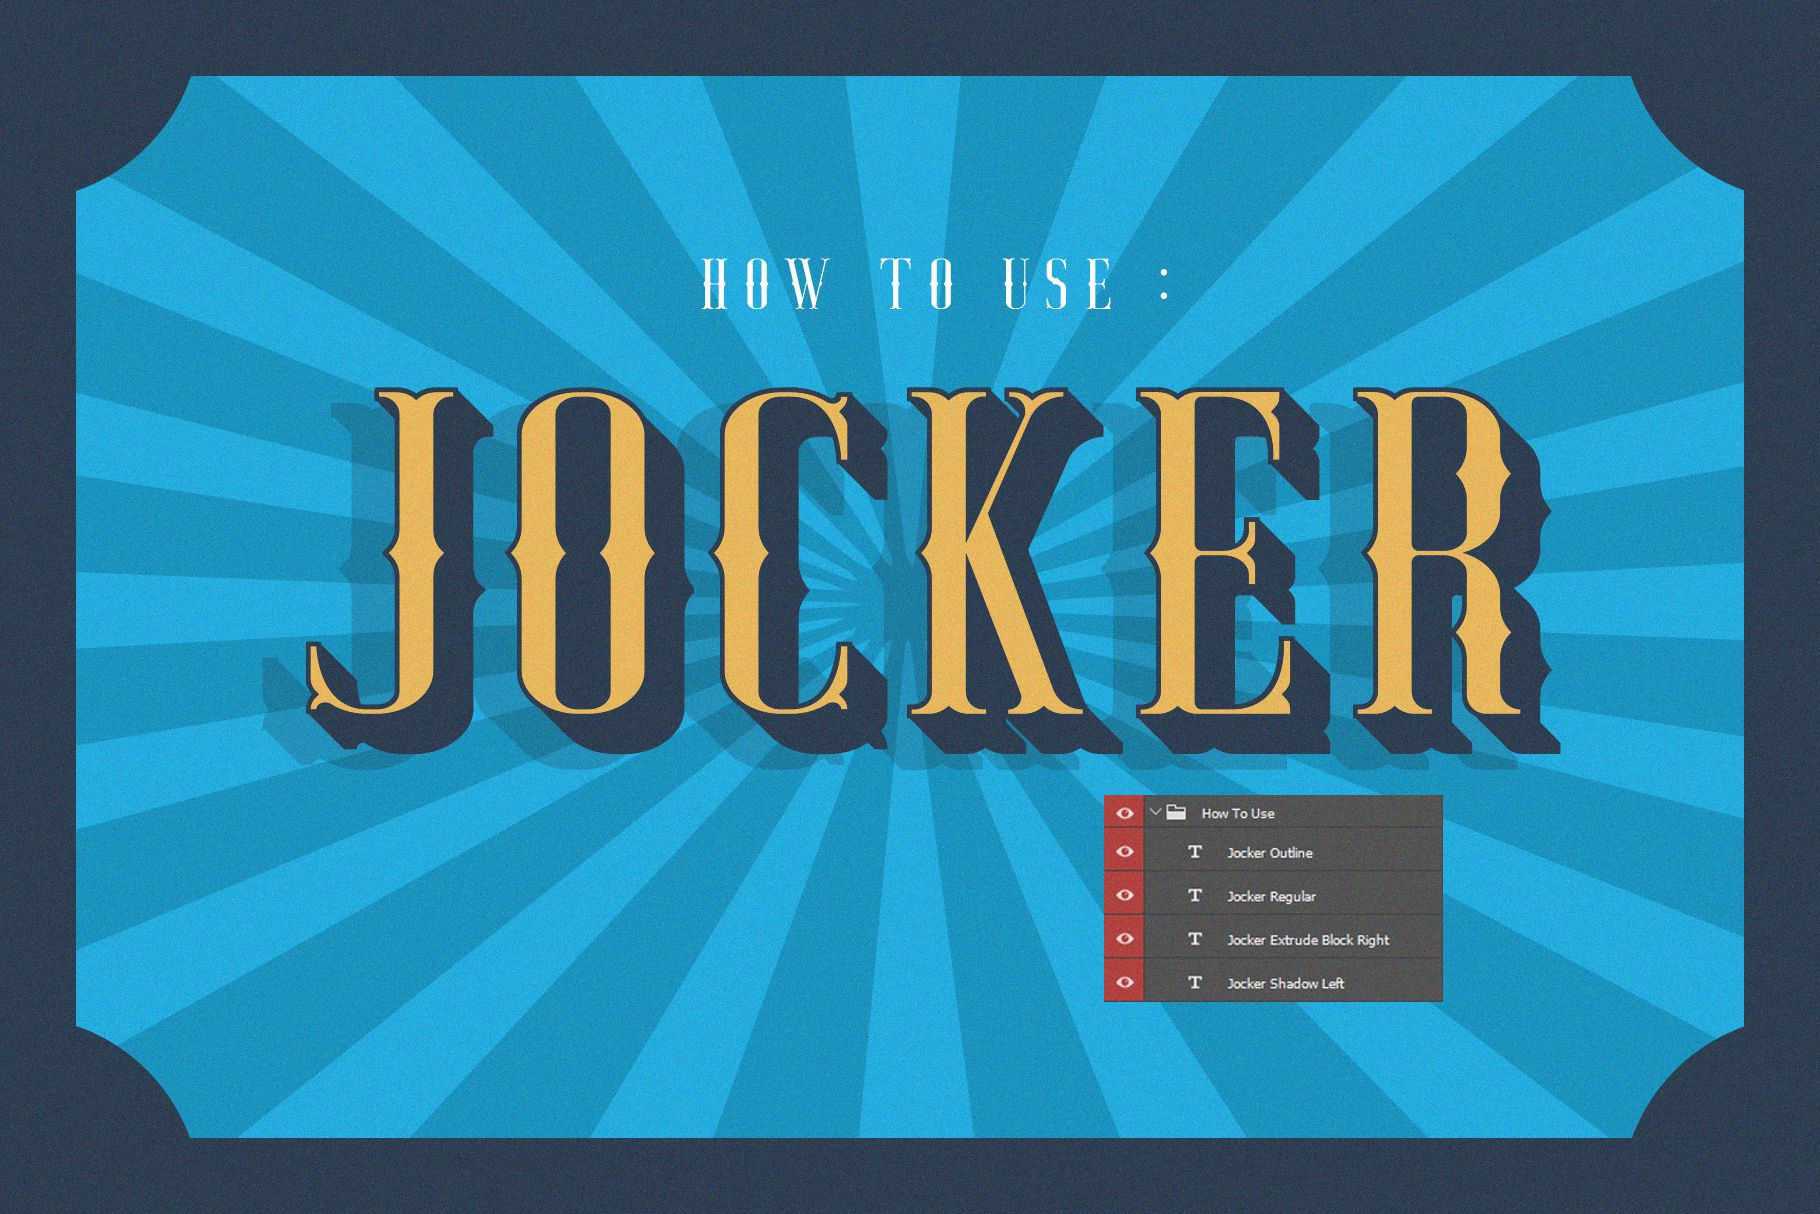 Jocker Free Font - serif